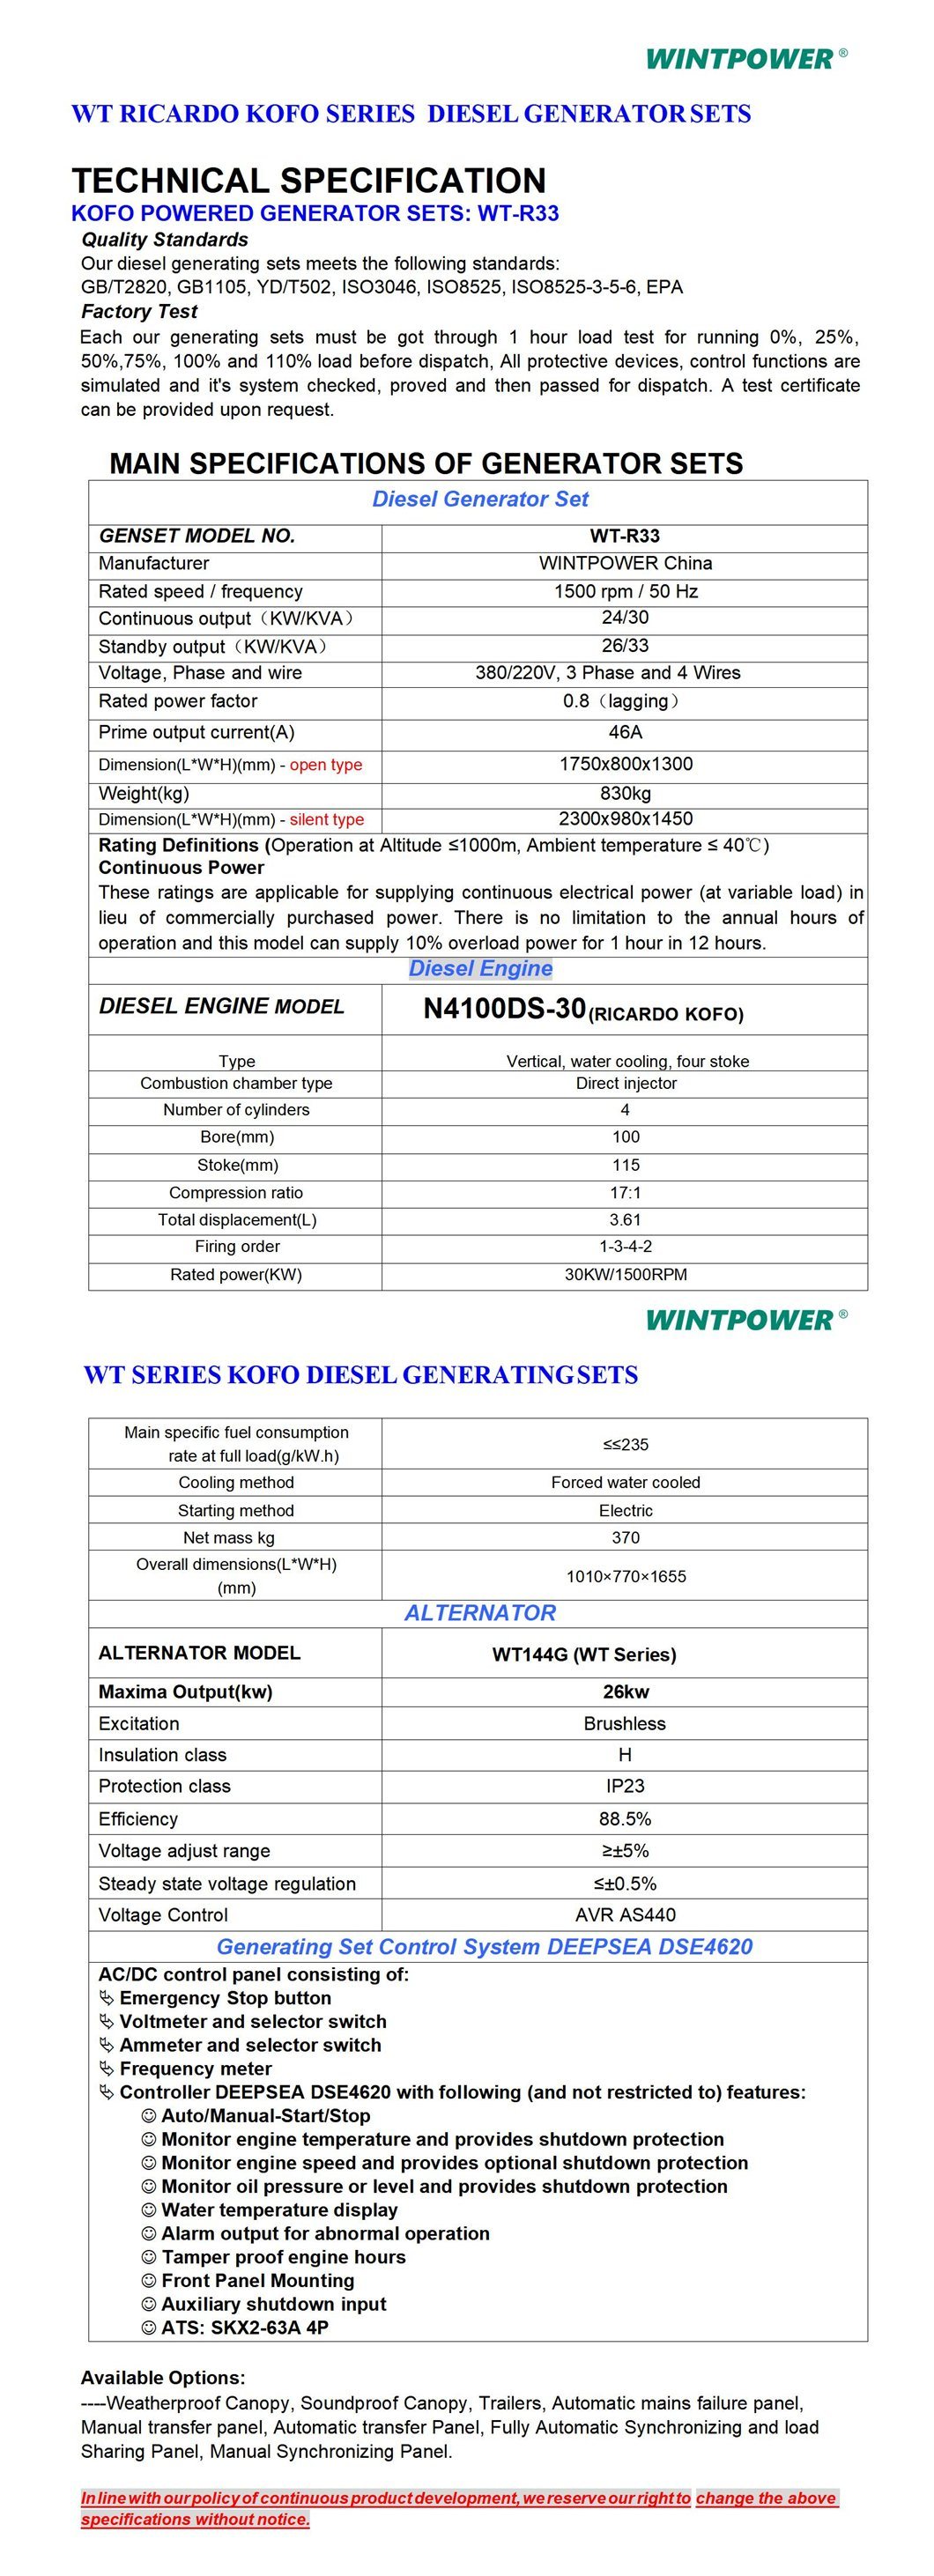 Weichai Kofo Ricardo Diesel Power Generator Set Dg Genset 30kVA N4100ds-30 40kVA N4105ds-38 50kVA N4105ds-42 60kVA N4105zds 75kVA N4105zds 805kVA R41